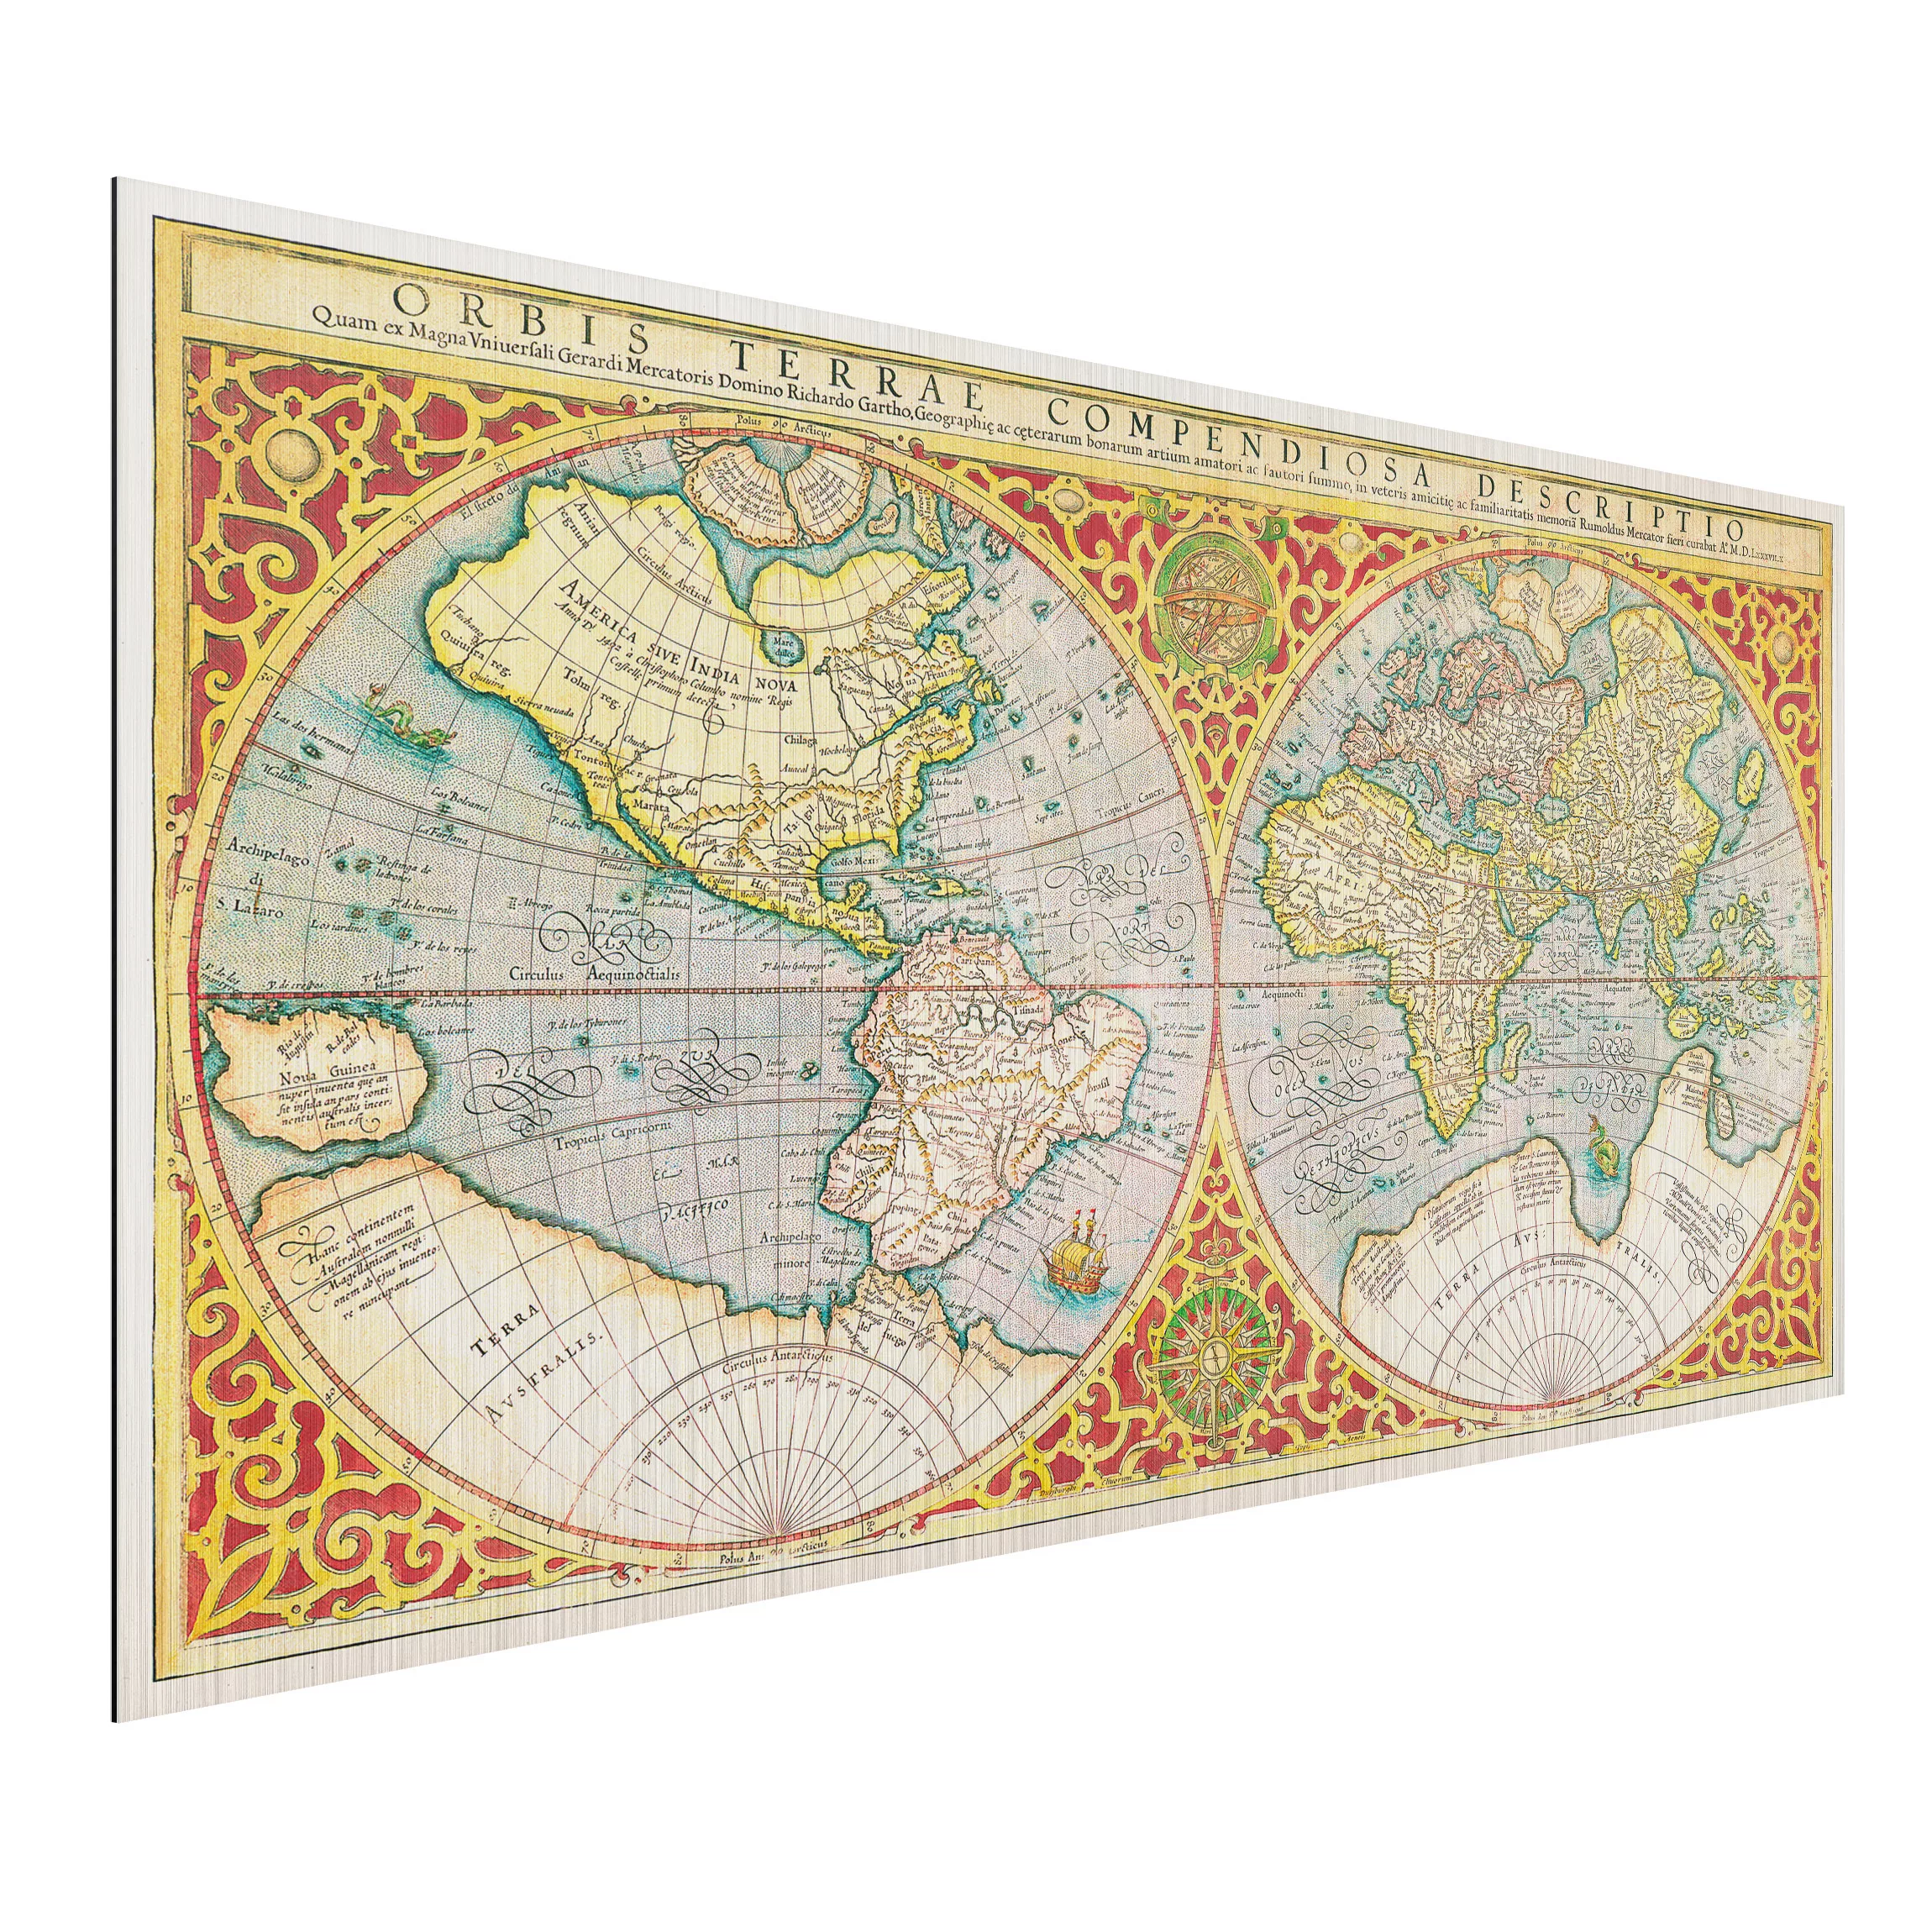 Alu-Dibond Bild Historische Weltkarte Orbis Terrare Compendiosa Descriptio günstig online kaufen